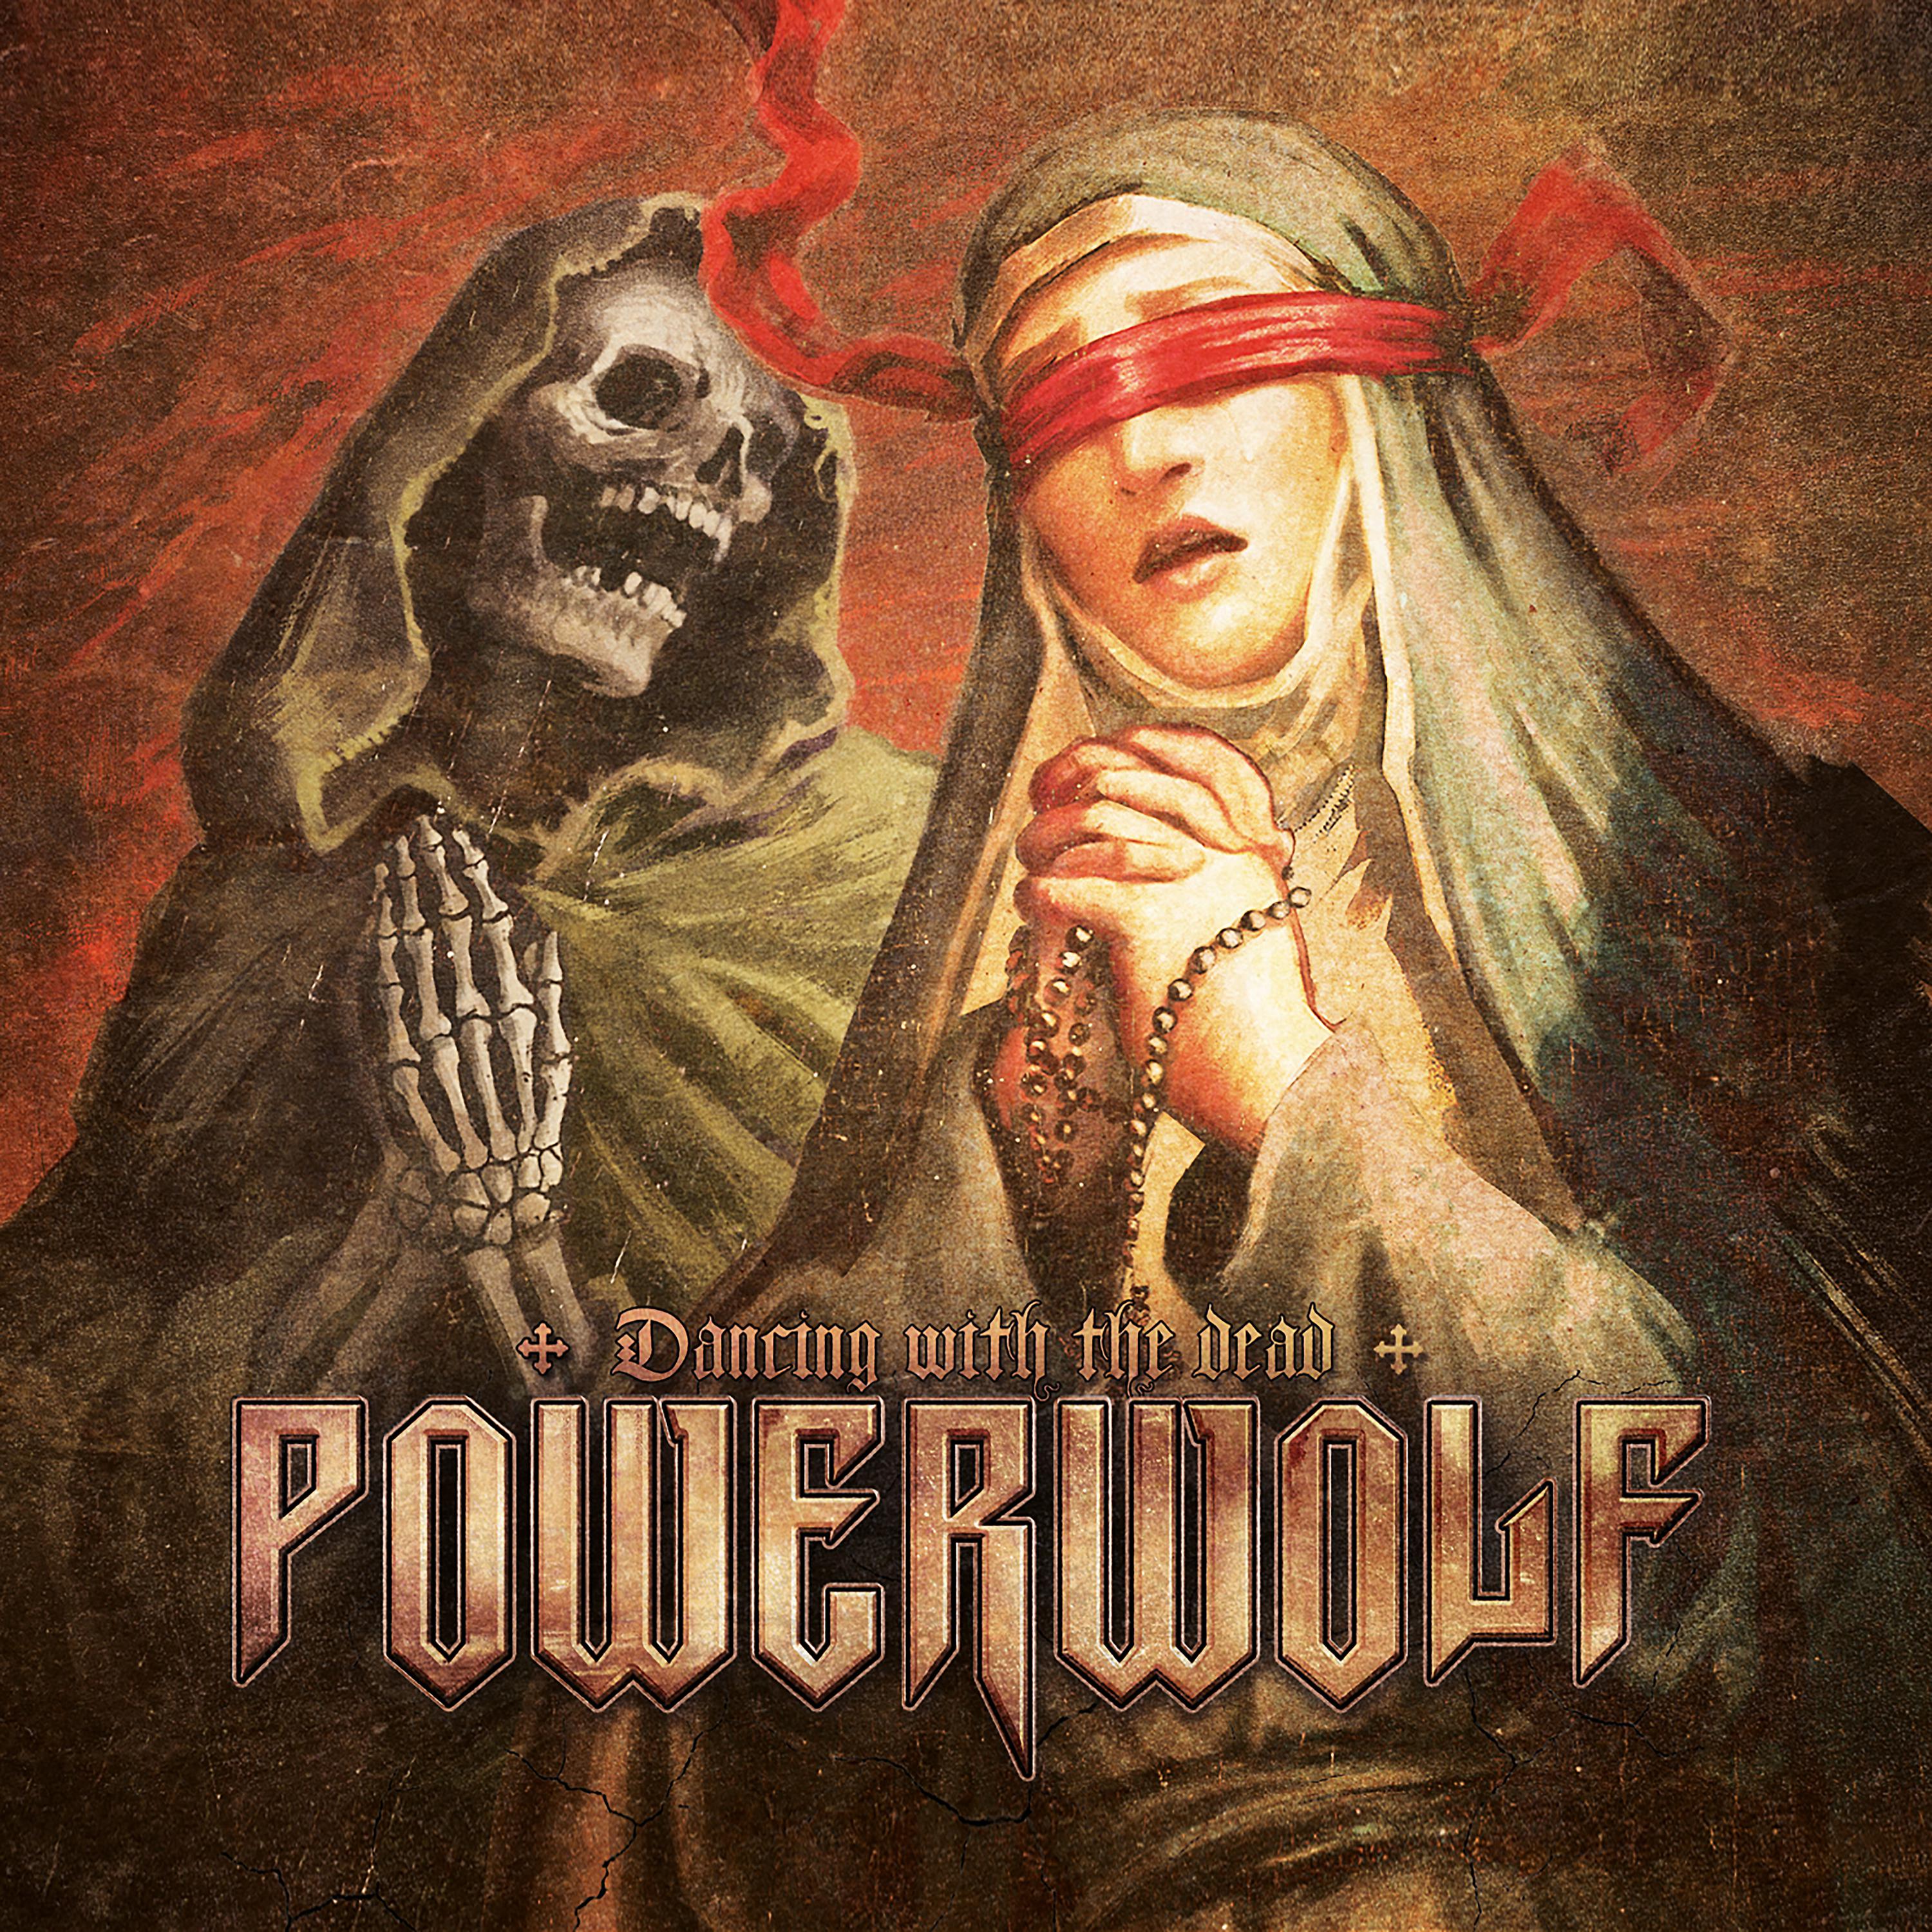 скачать концертный альбом Powerwolf - Blessed & Possessed Tour Edition  (2017)